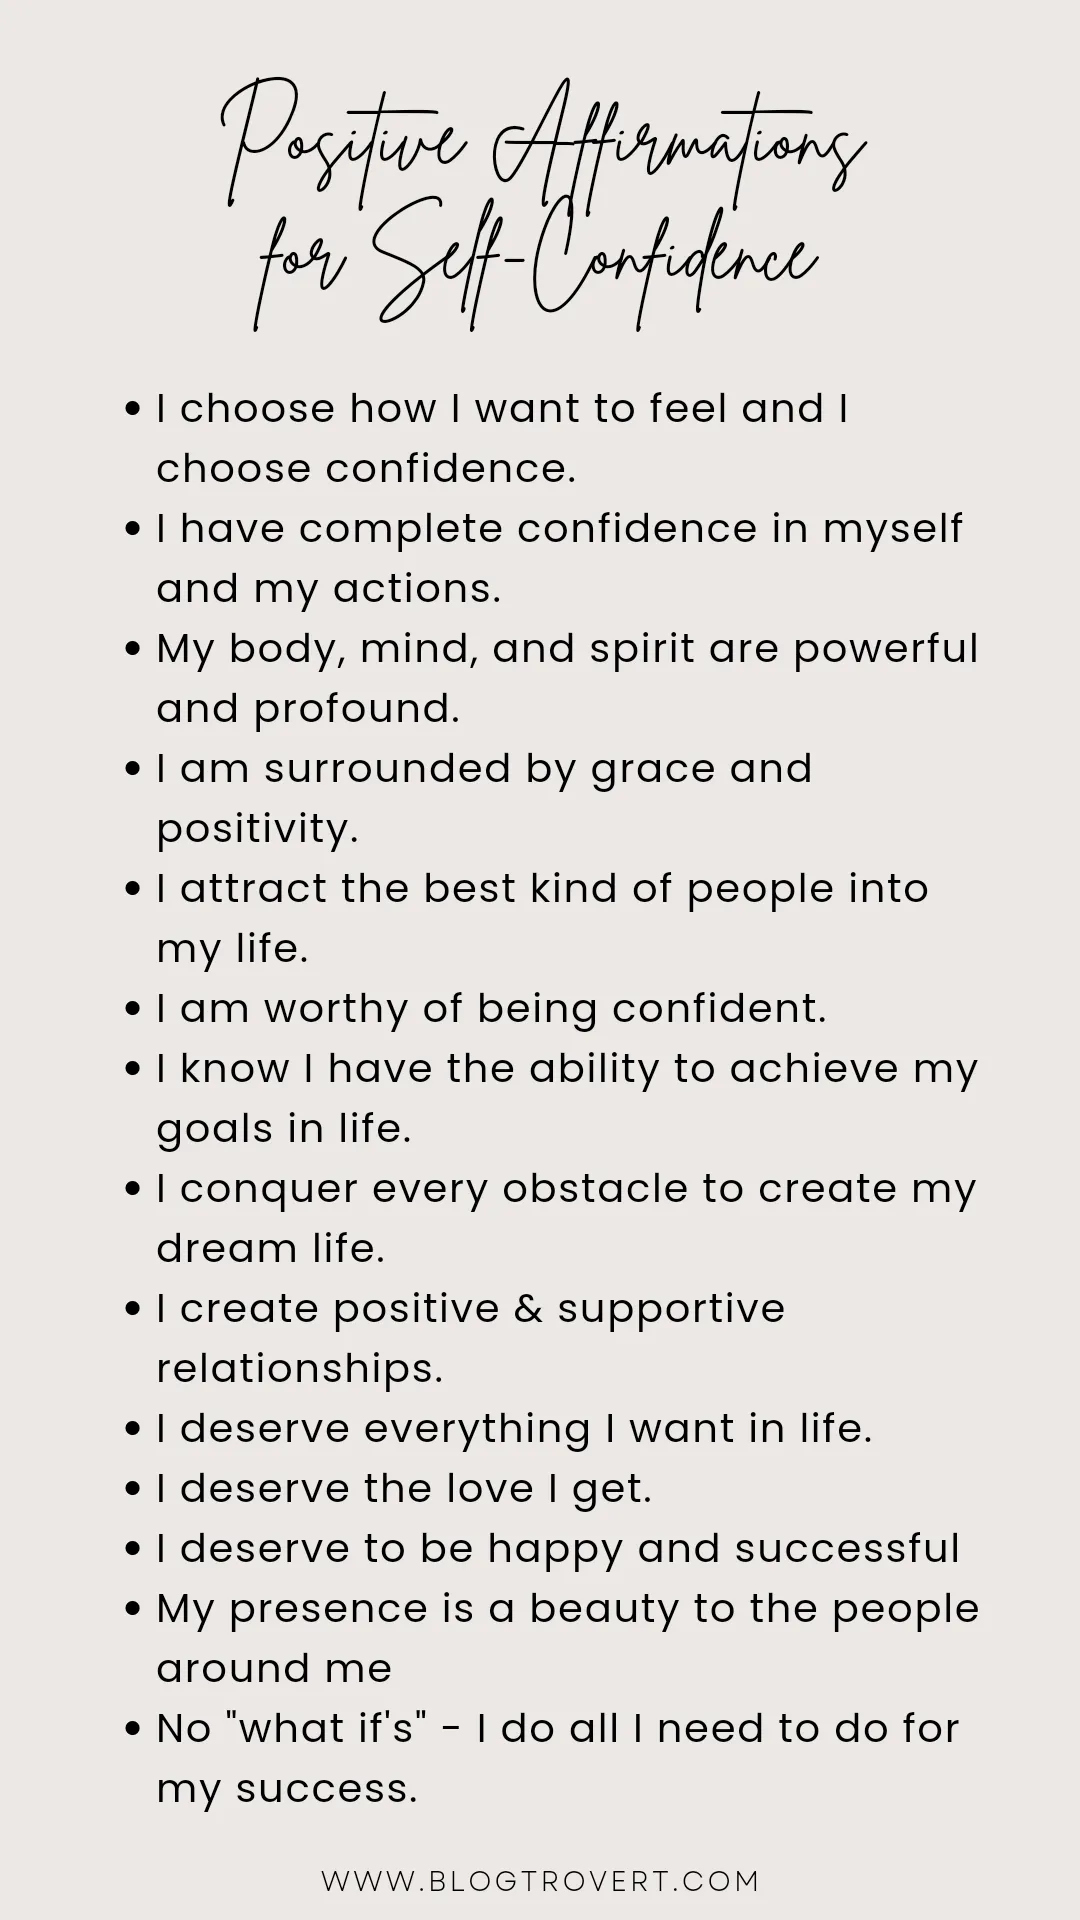 100 unique positive affirmations for self-confidence 1